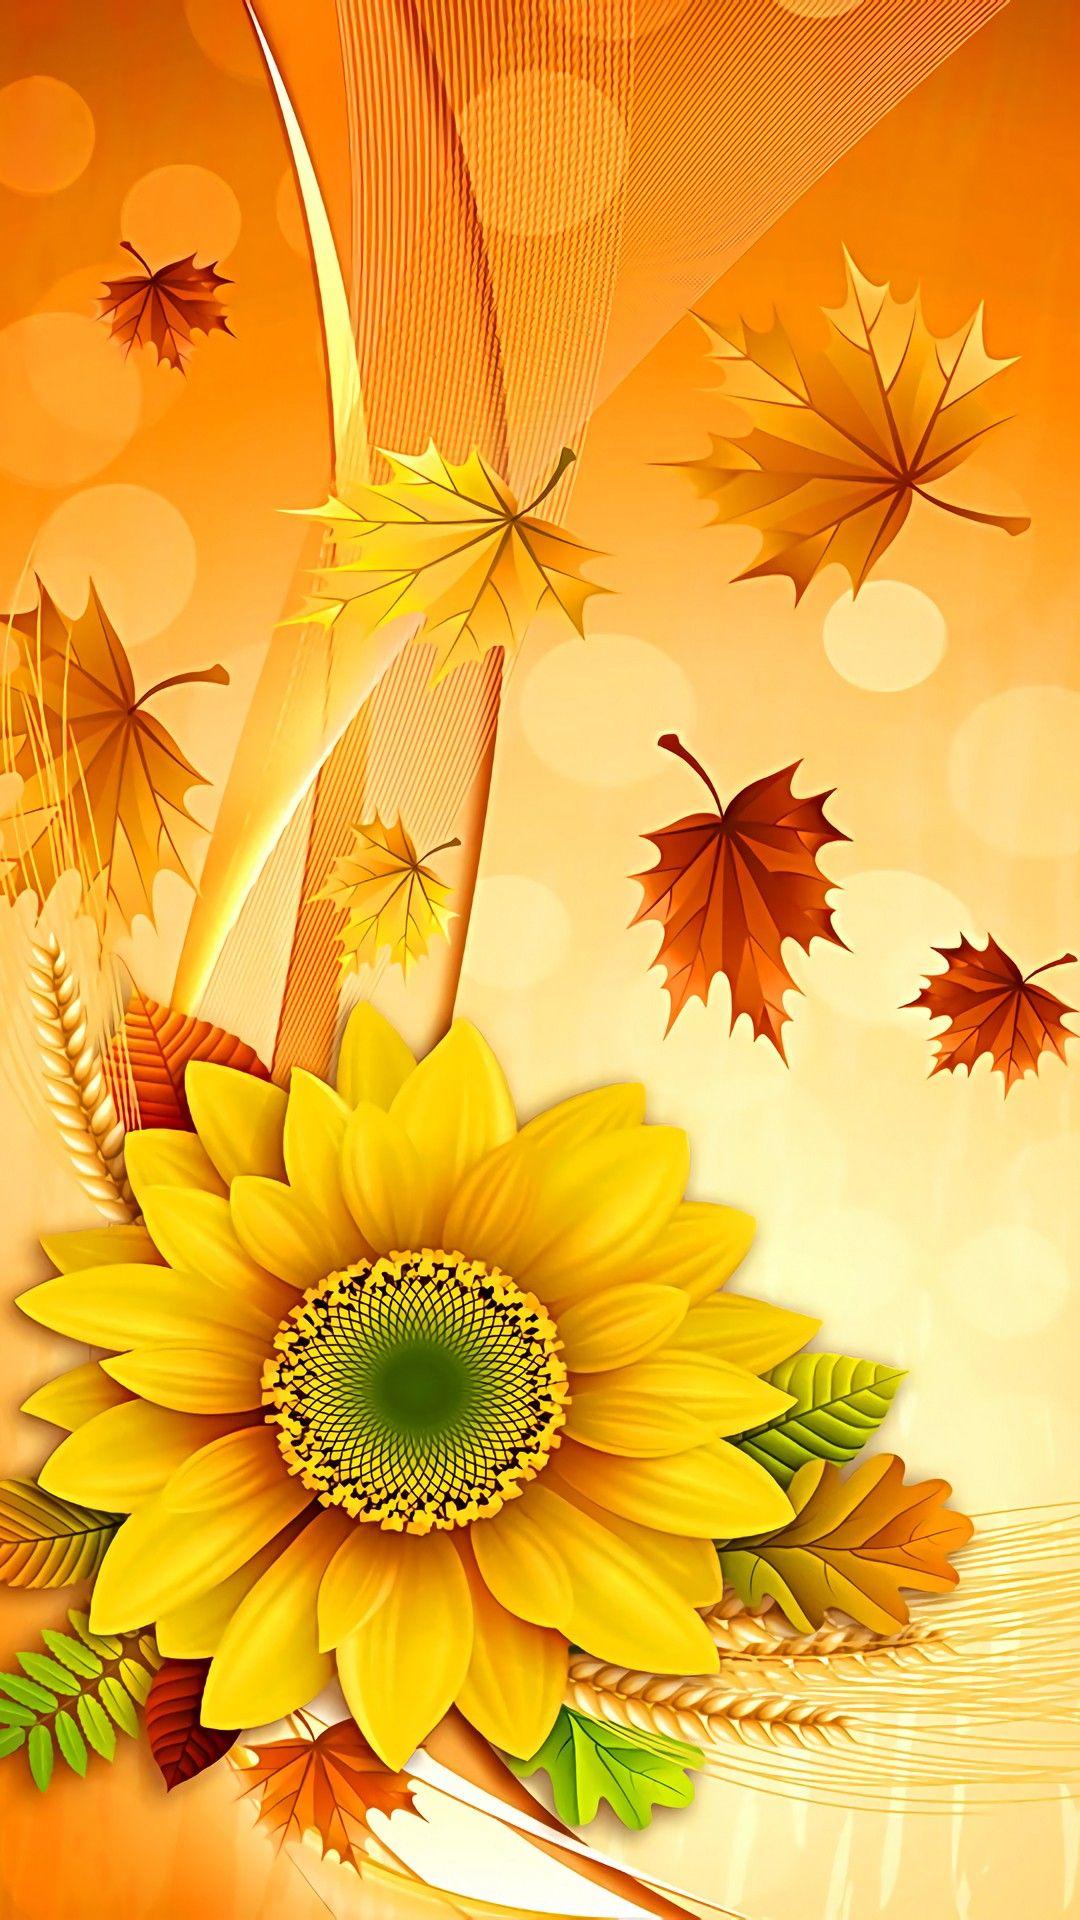 Fall wallpaper. Fall wallpaper, Flower wallpaper, iPhone wallpaper fall